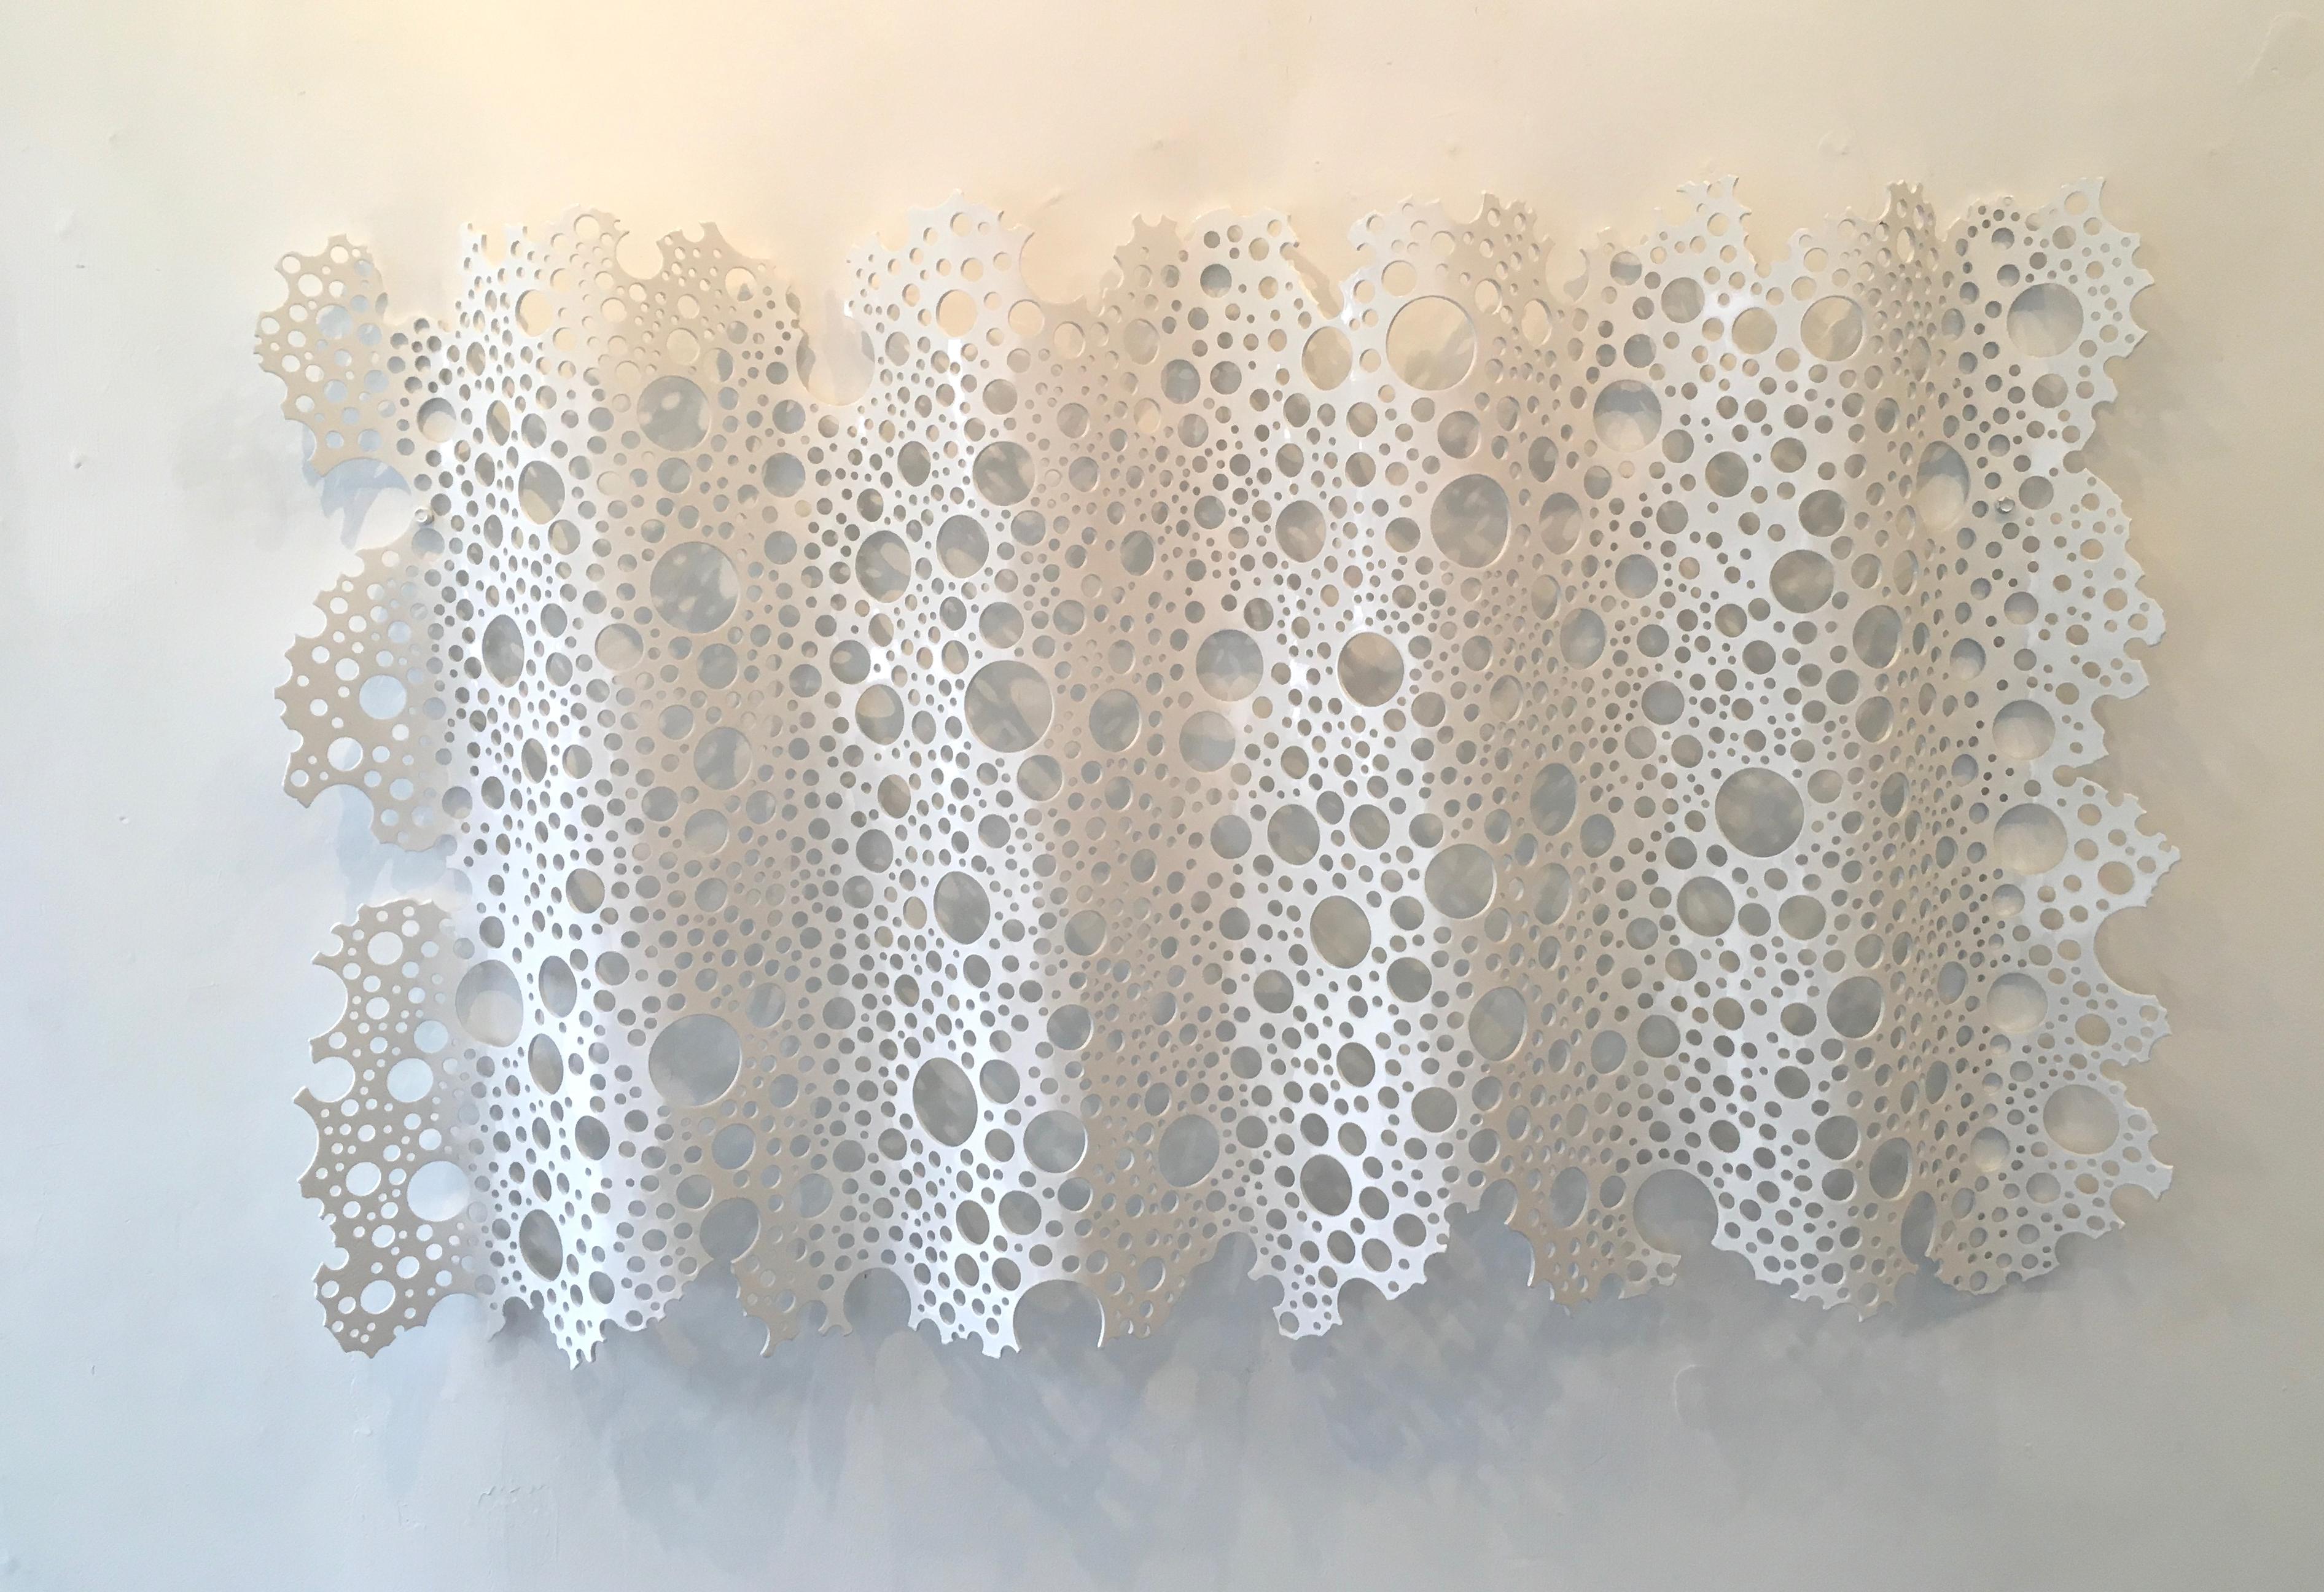 Michael Enn Sirvet Abstract Sculpture - Wave Wall Sculpture, powdercoat aluminum wall sculpture, Minimalist 